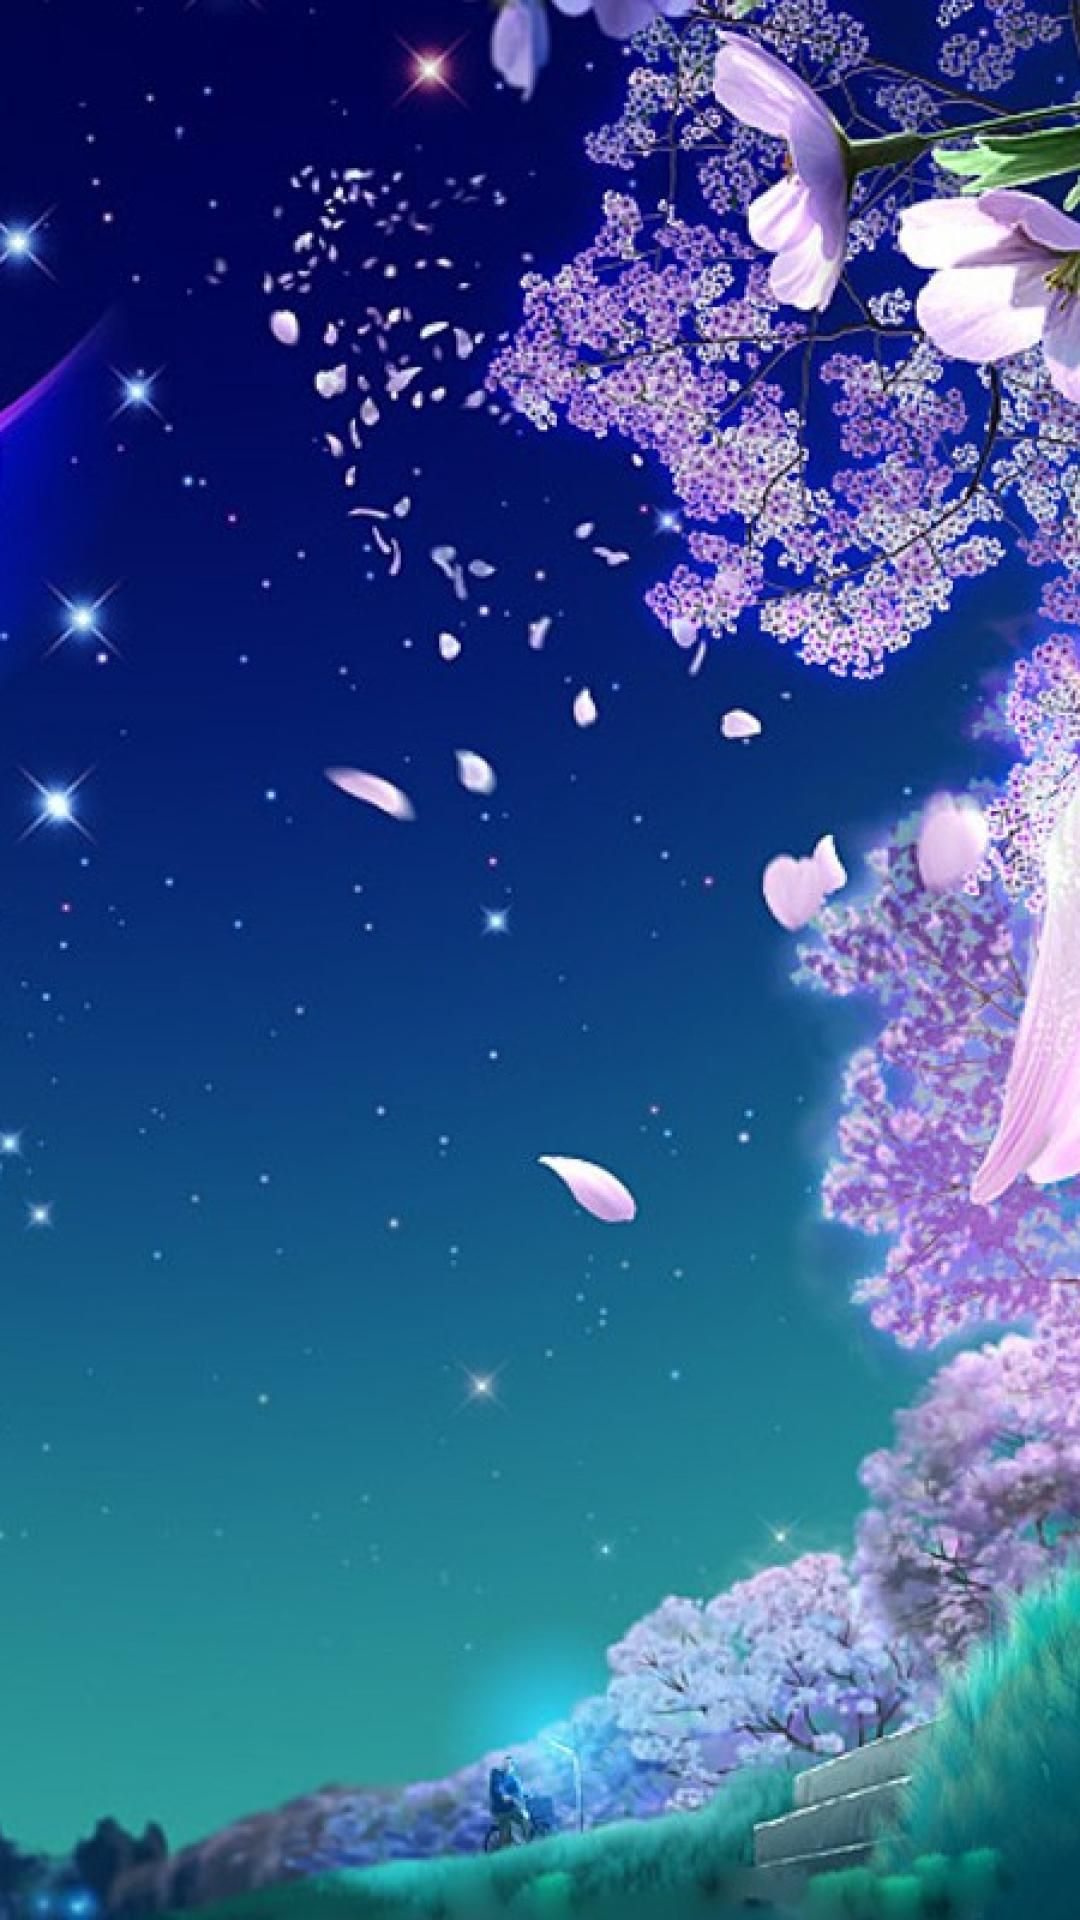 Fantasy cherry blossom iphone background best flower wallpaper anime scenery wallpaper beautiful landscape wallpaper